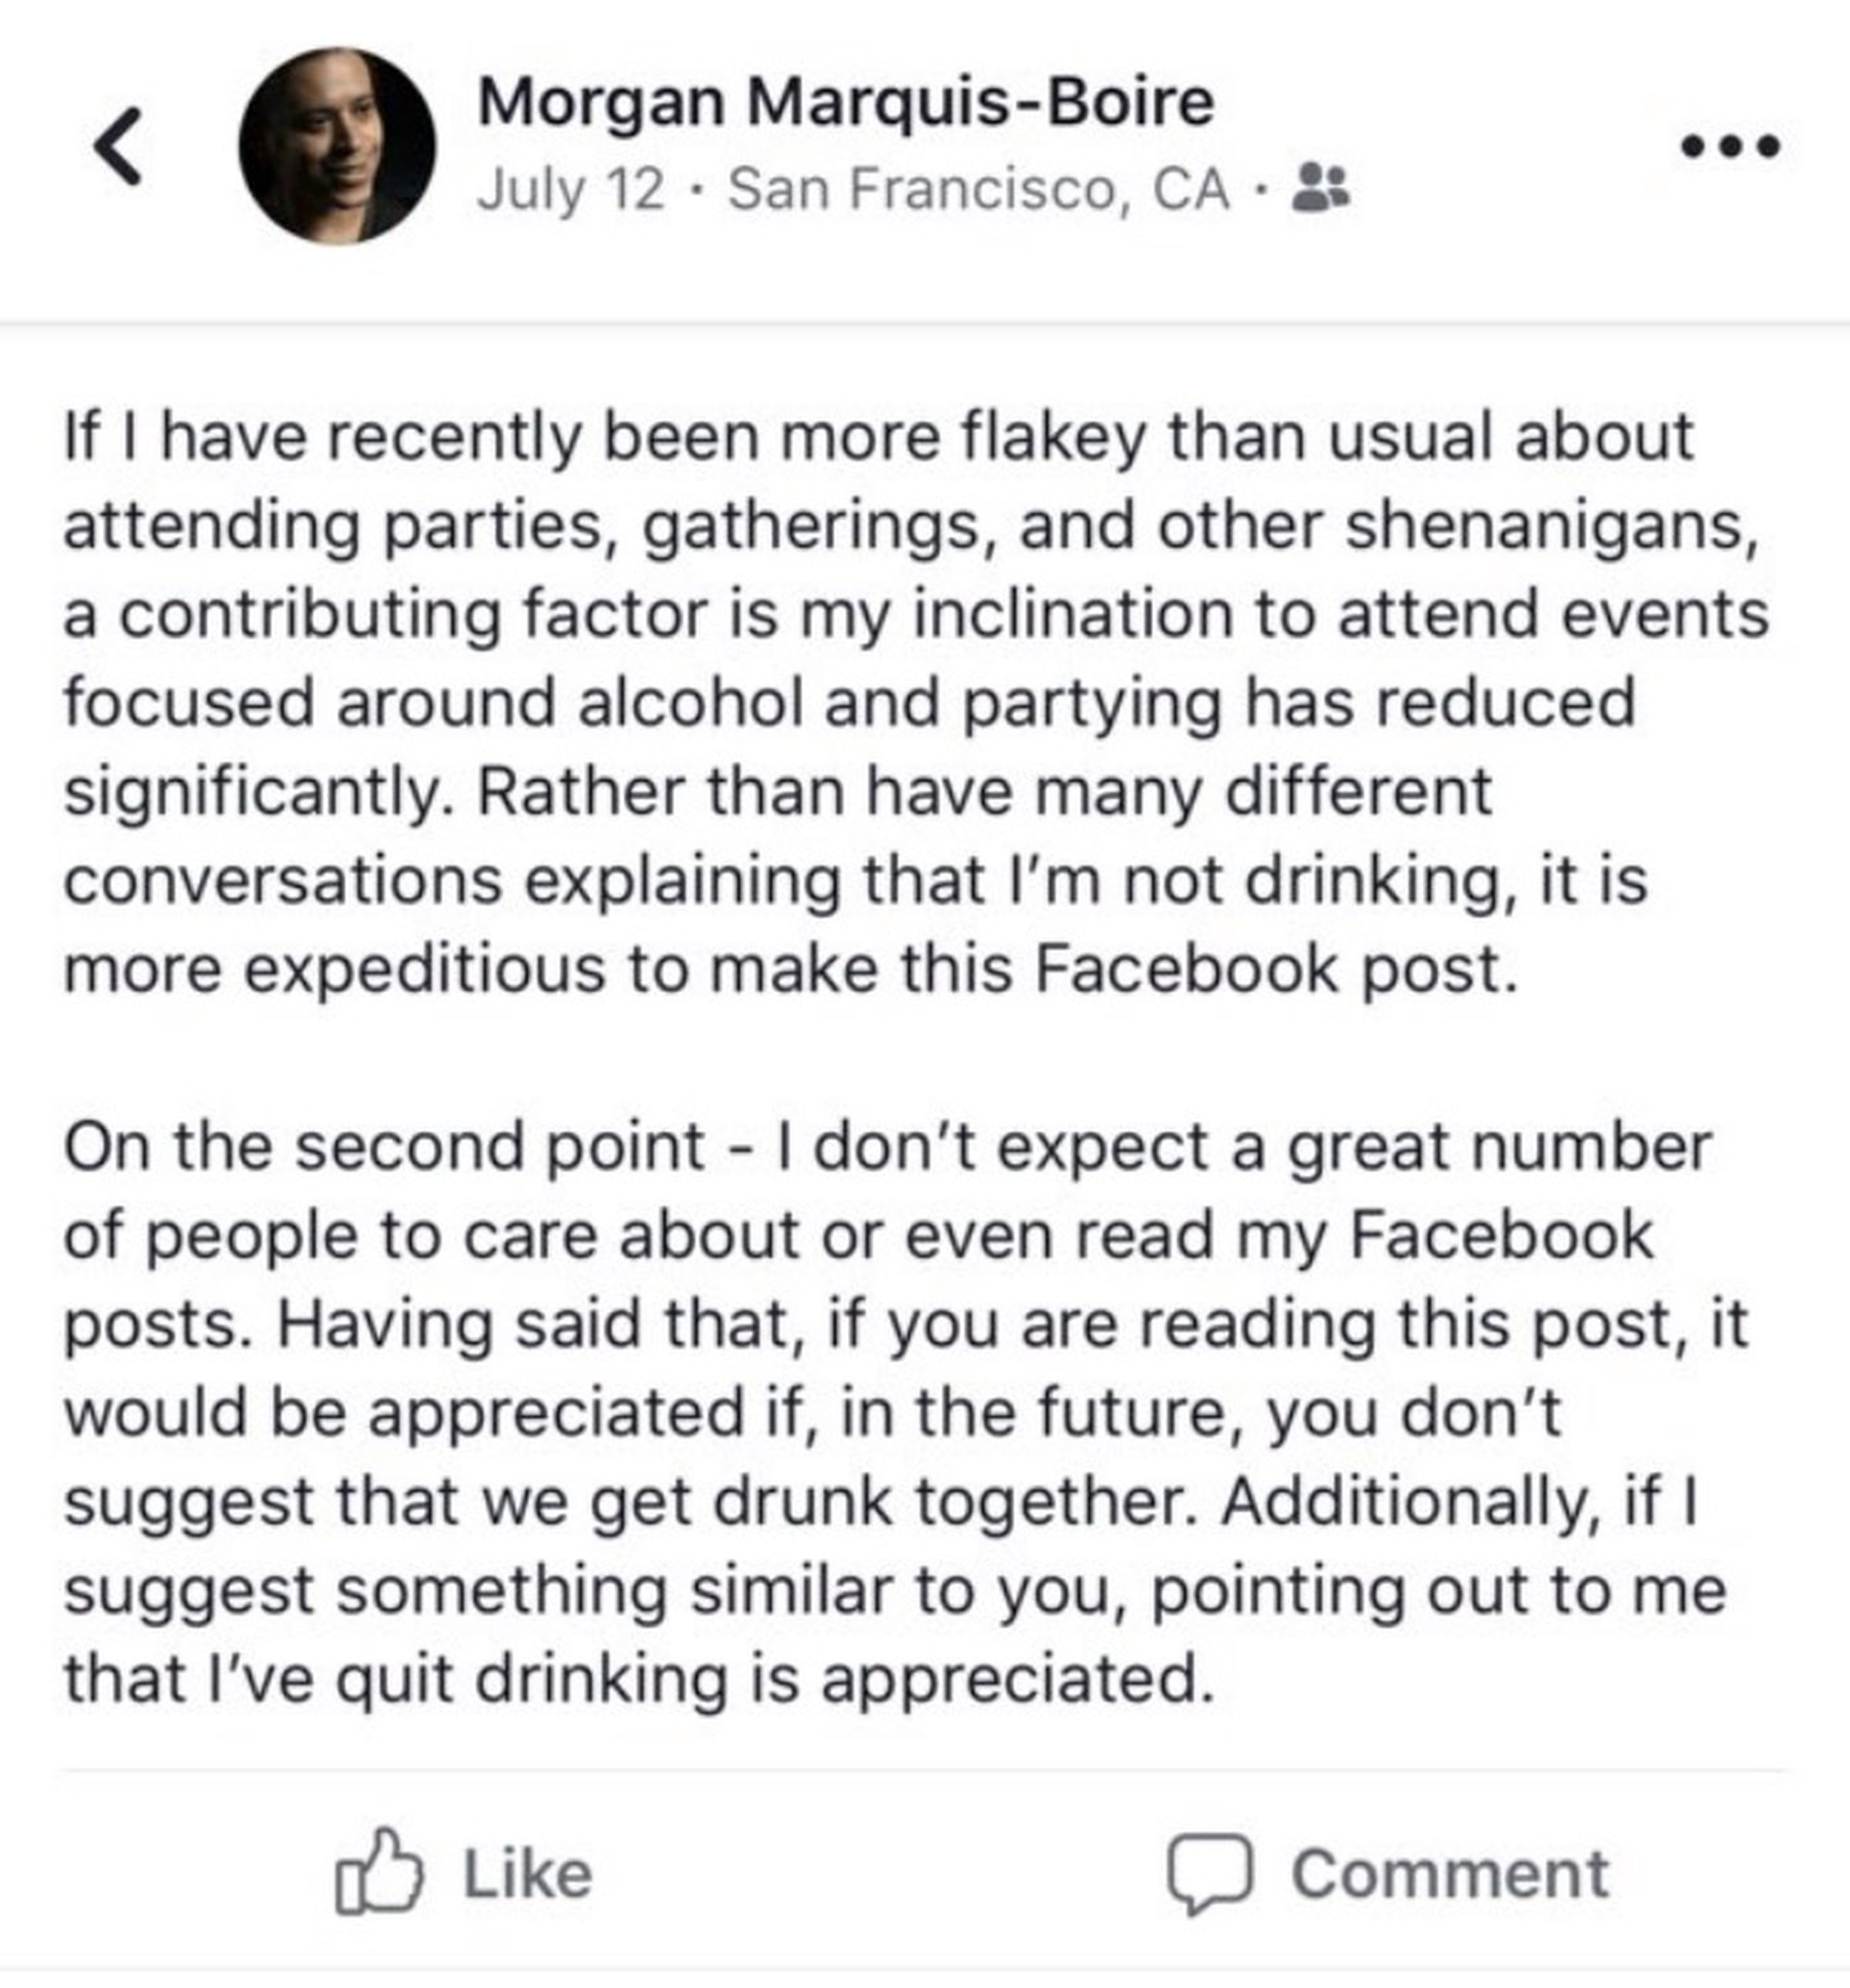 Morgan Marquis-Boire’s July 12th Facebook post.